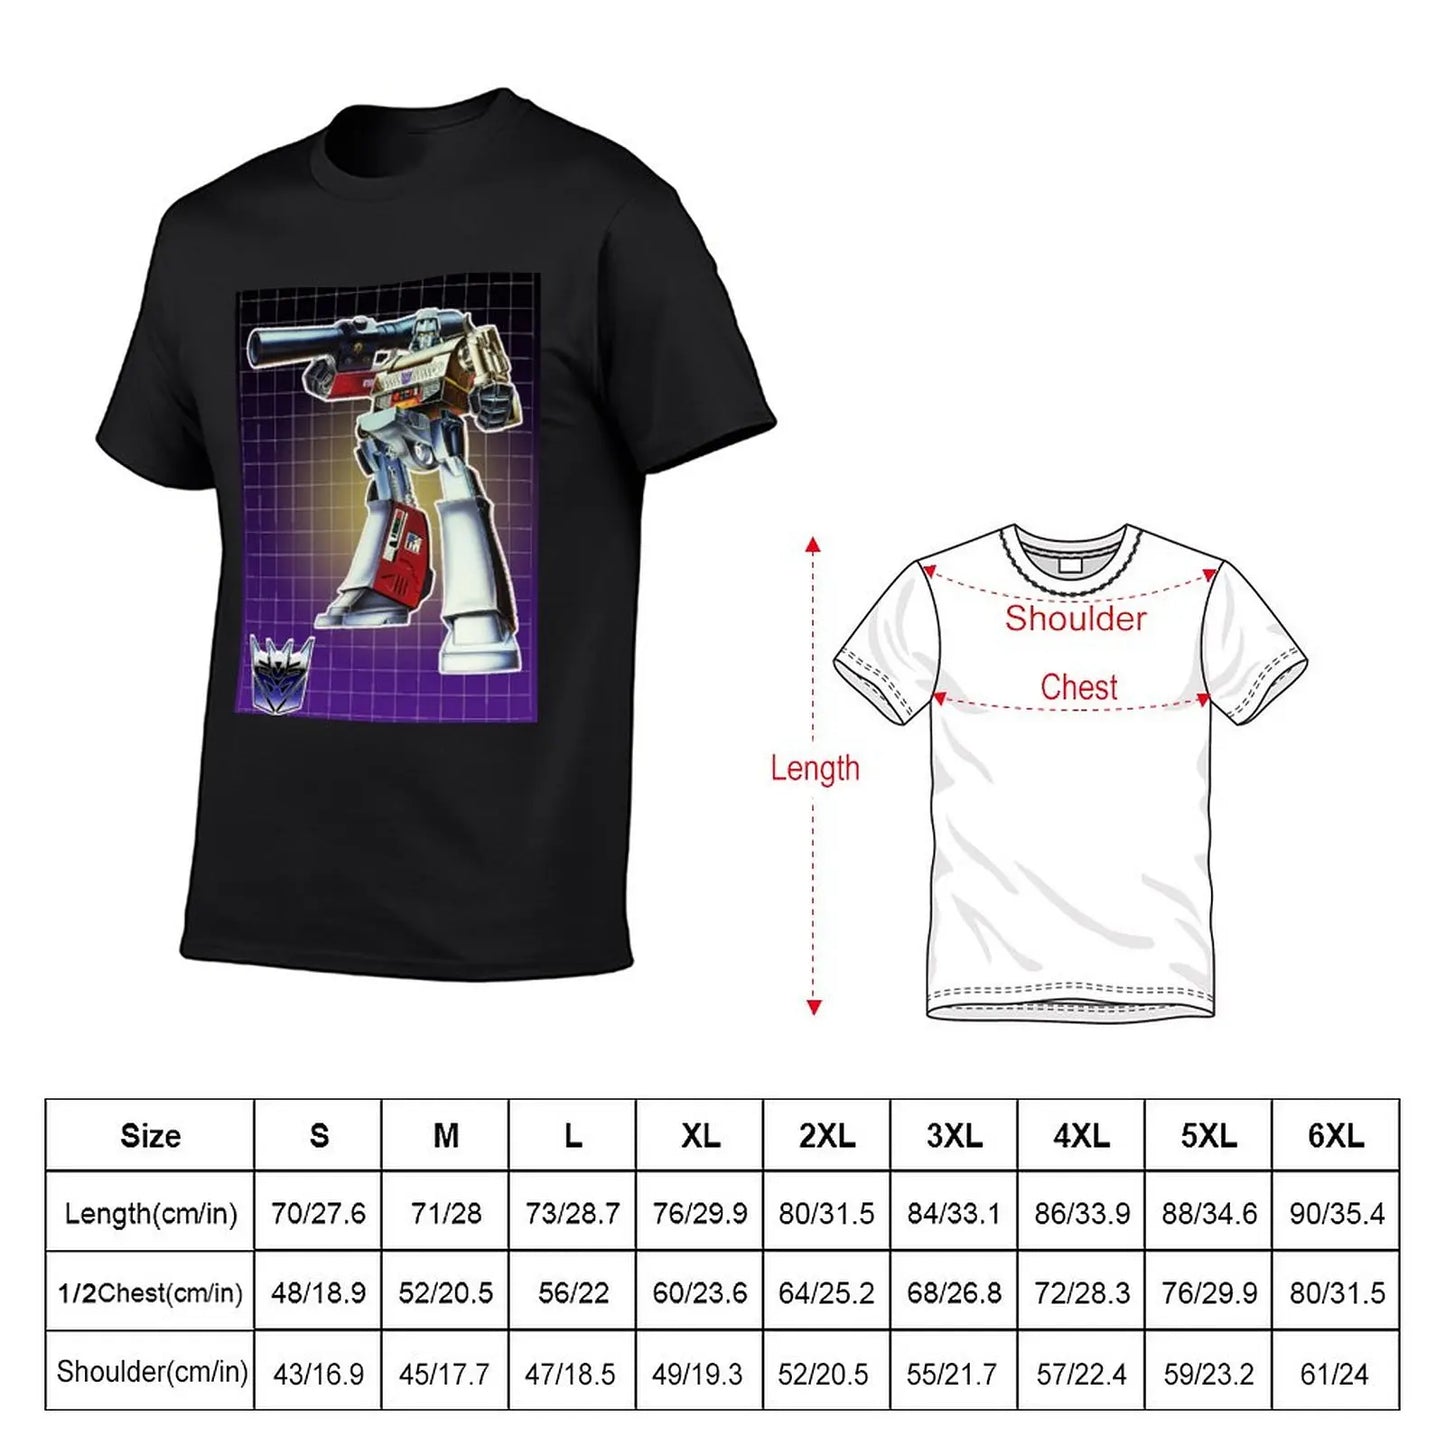 Nueva camiseta MEGATRON G1 BOX ART, camiseta de manga corta, camisetas gráficas personalizadas, ropa para hombre